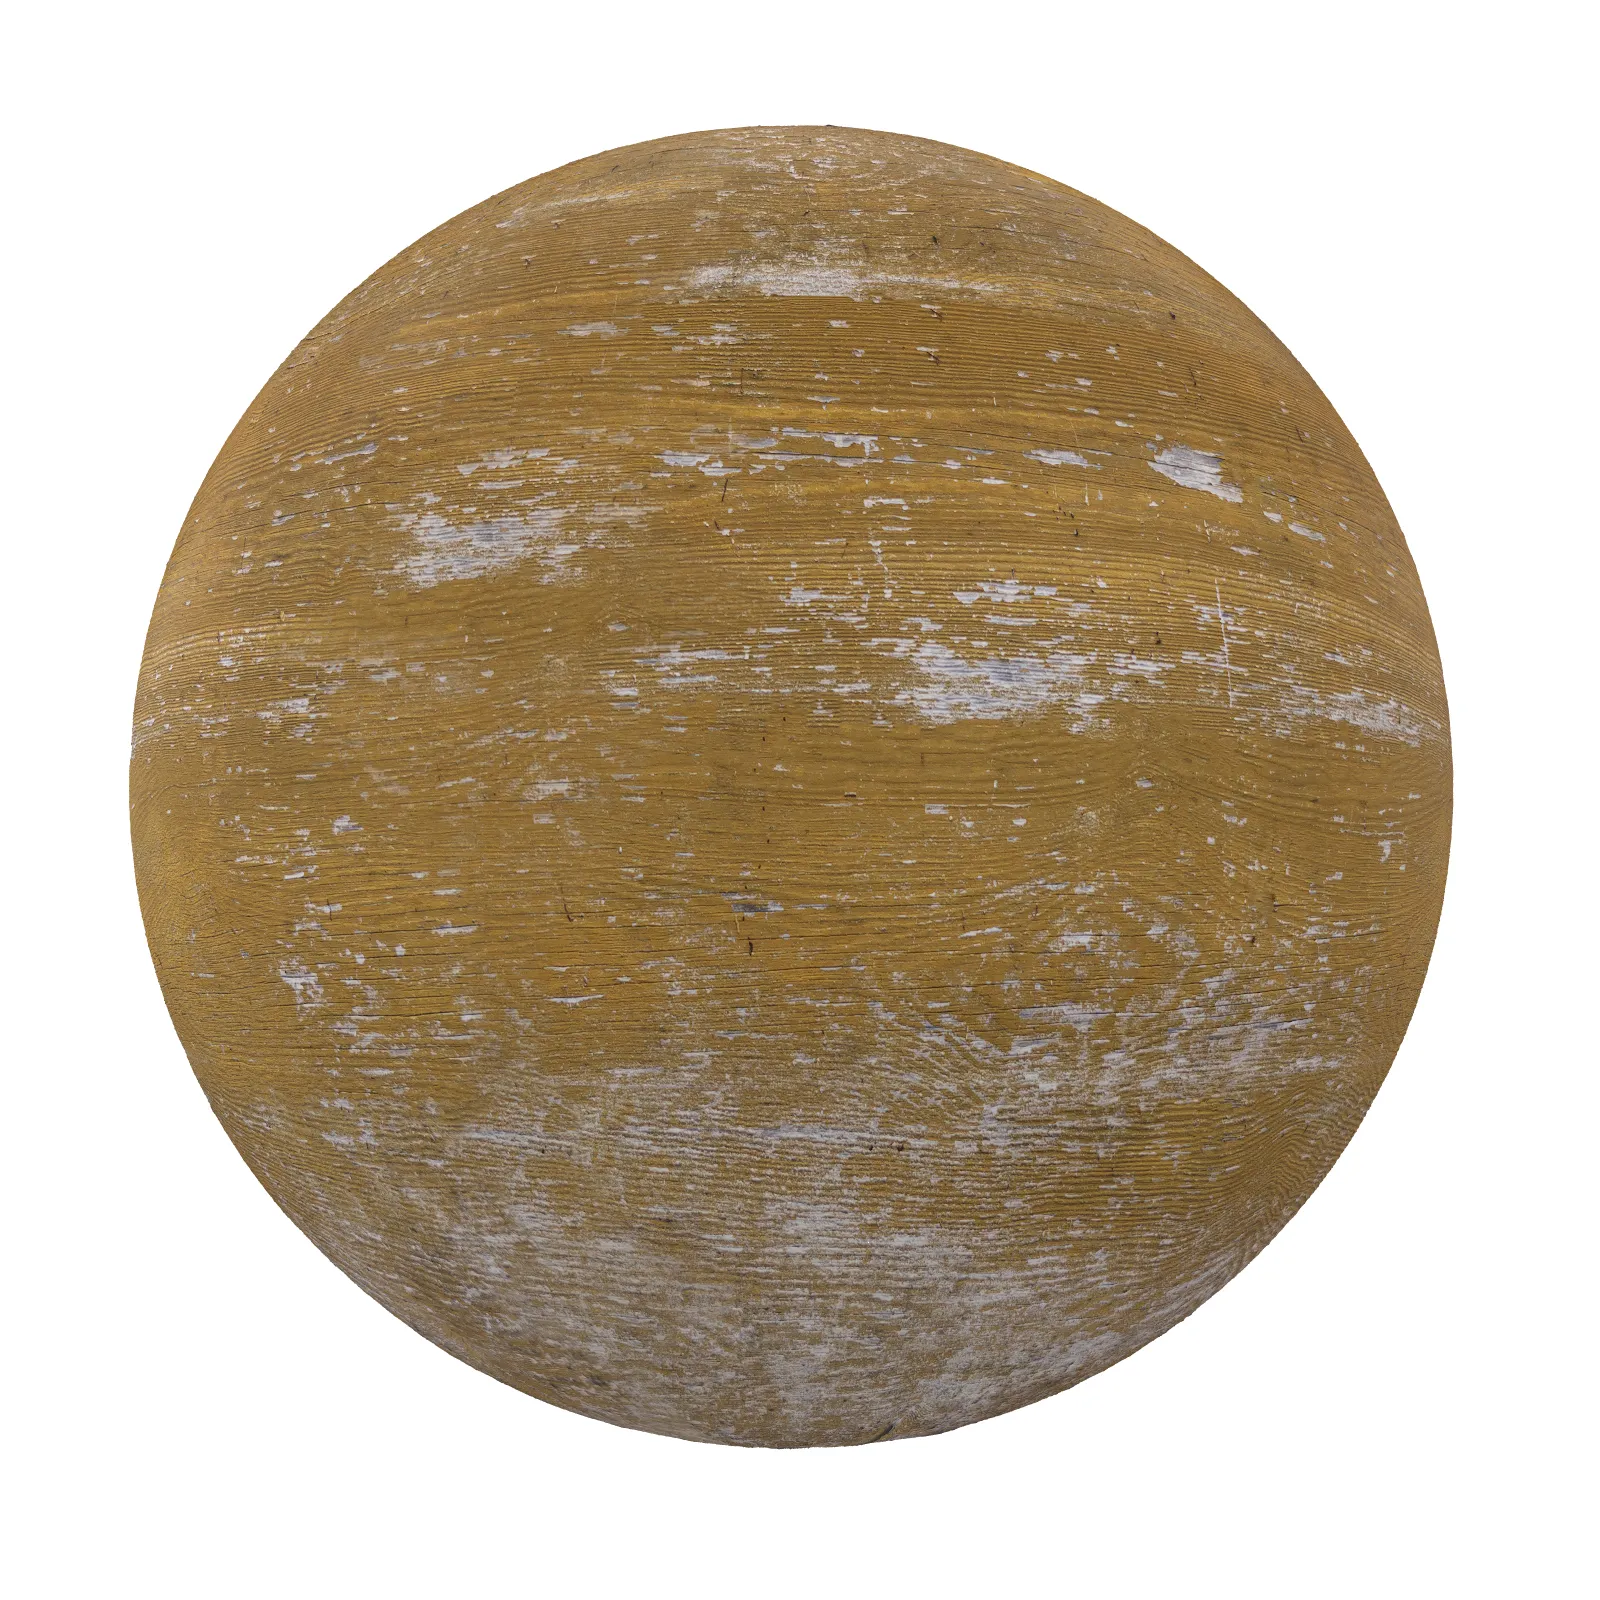 3ds Max Files – Texture – 8 – Wood Texture – 113 – Wood Texture by Minh Nguyen